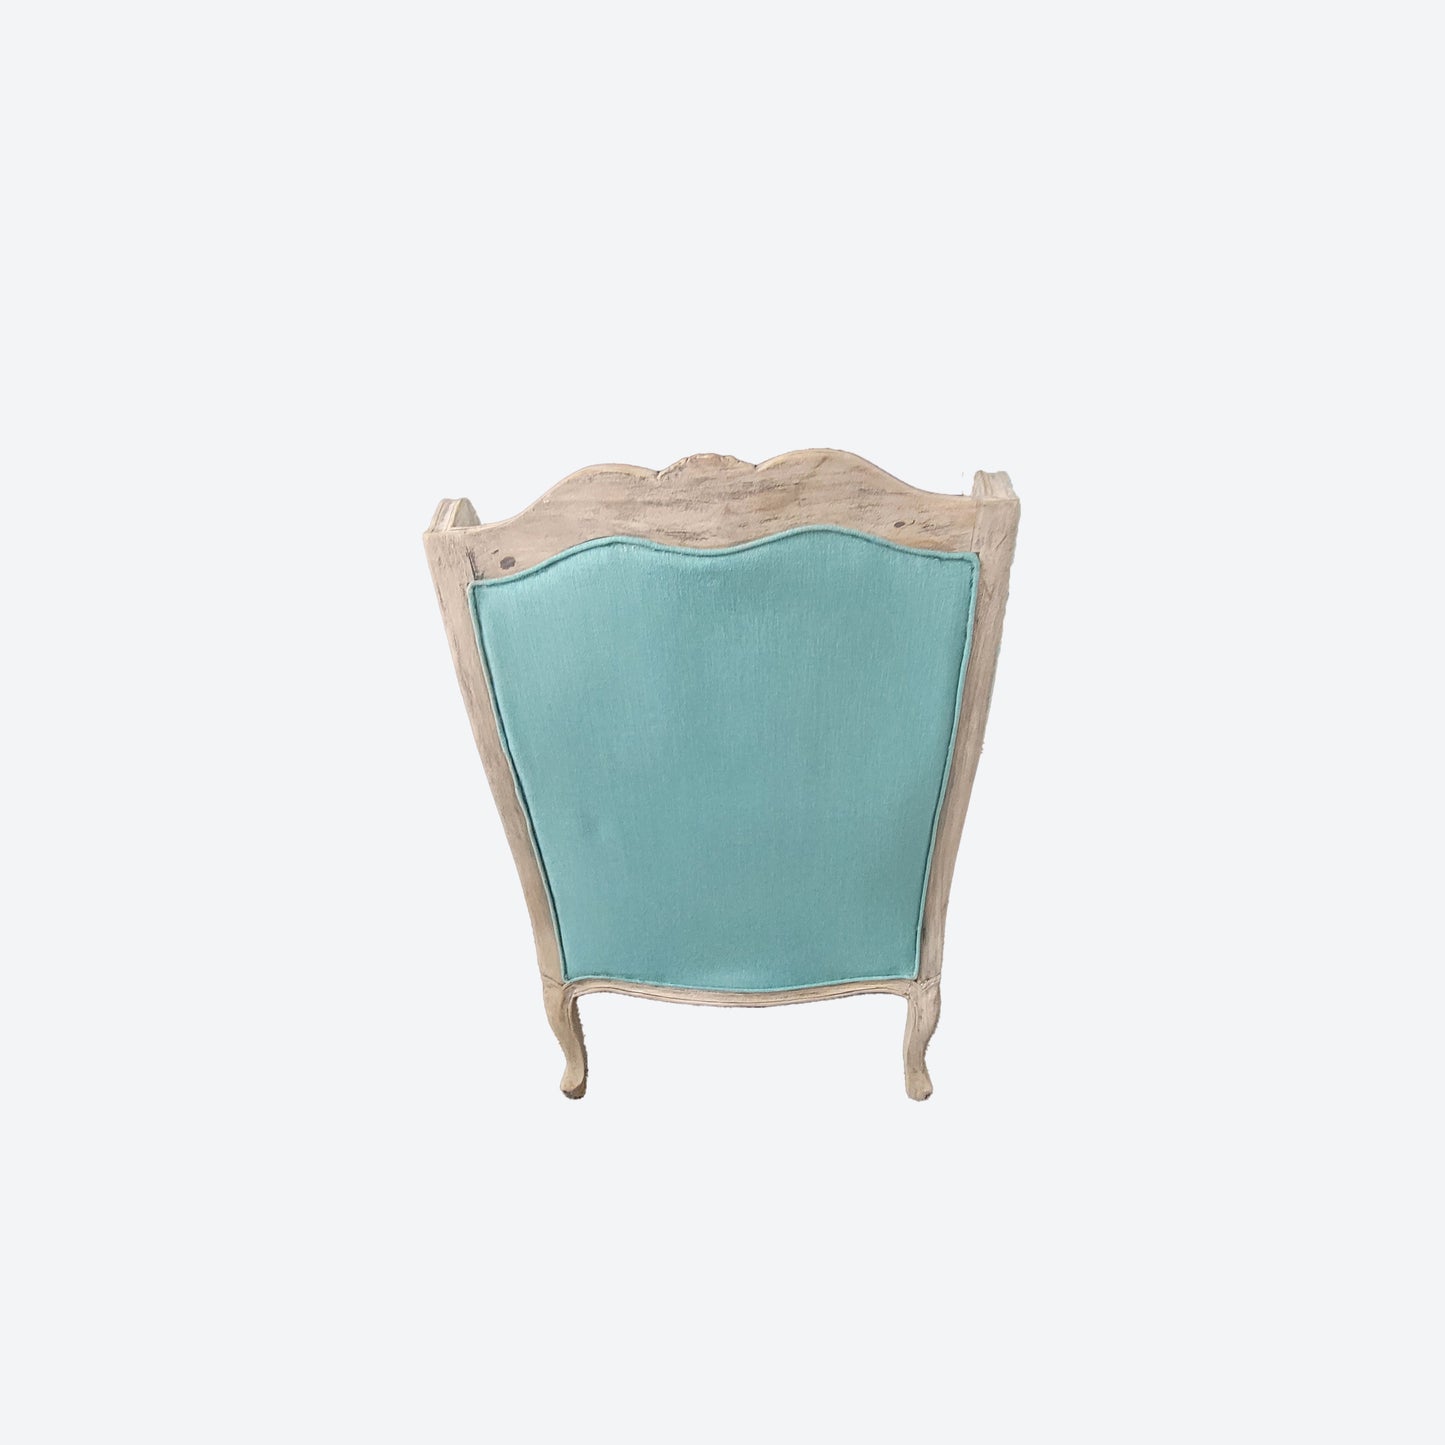 Teal Tufted Organic Canvas Fabric Sofa Chairs With Cedar Wood Trim -SK- SKU 1097